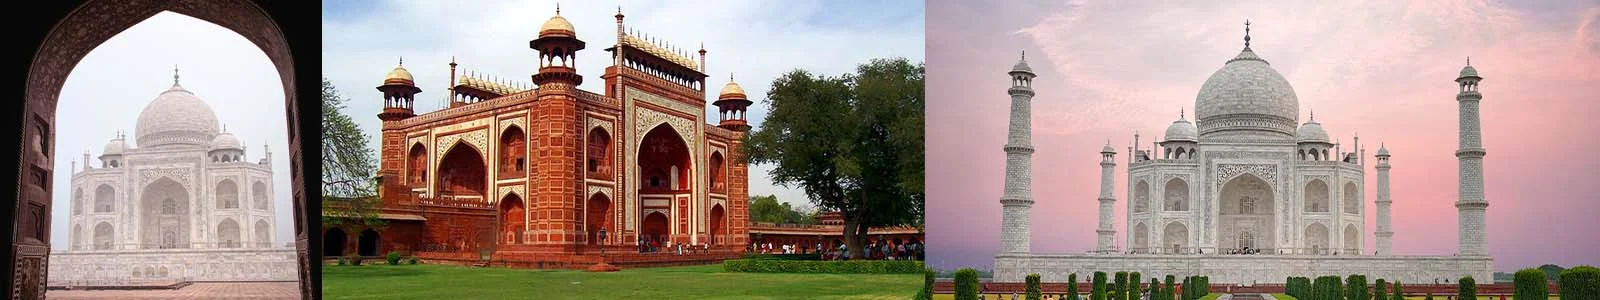 Private Full Day Taj Mahal & Fatehpur Sikri Tour from Delhi By Car